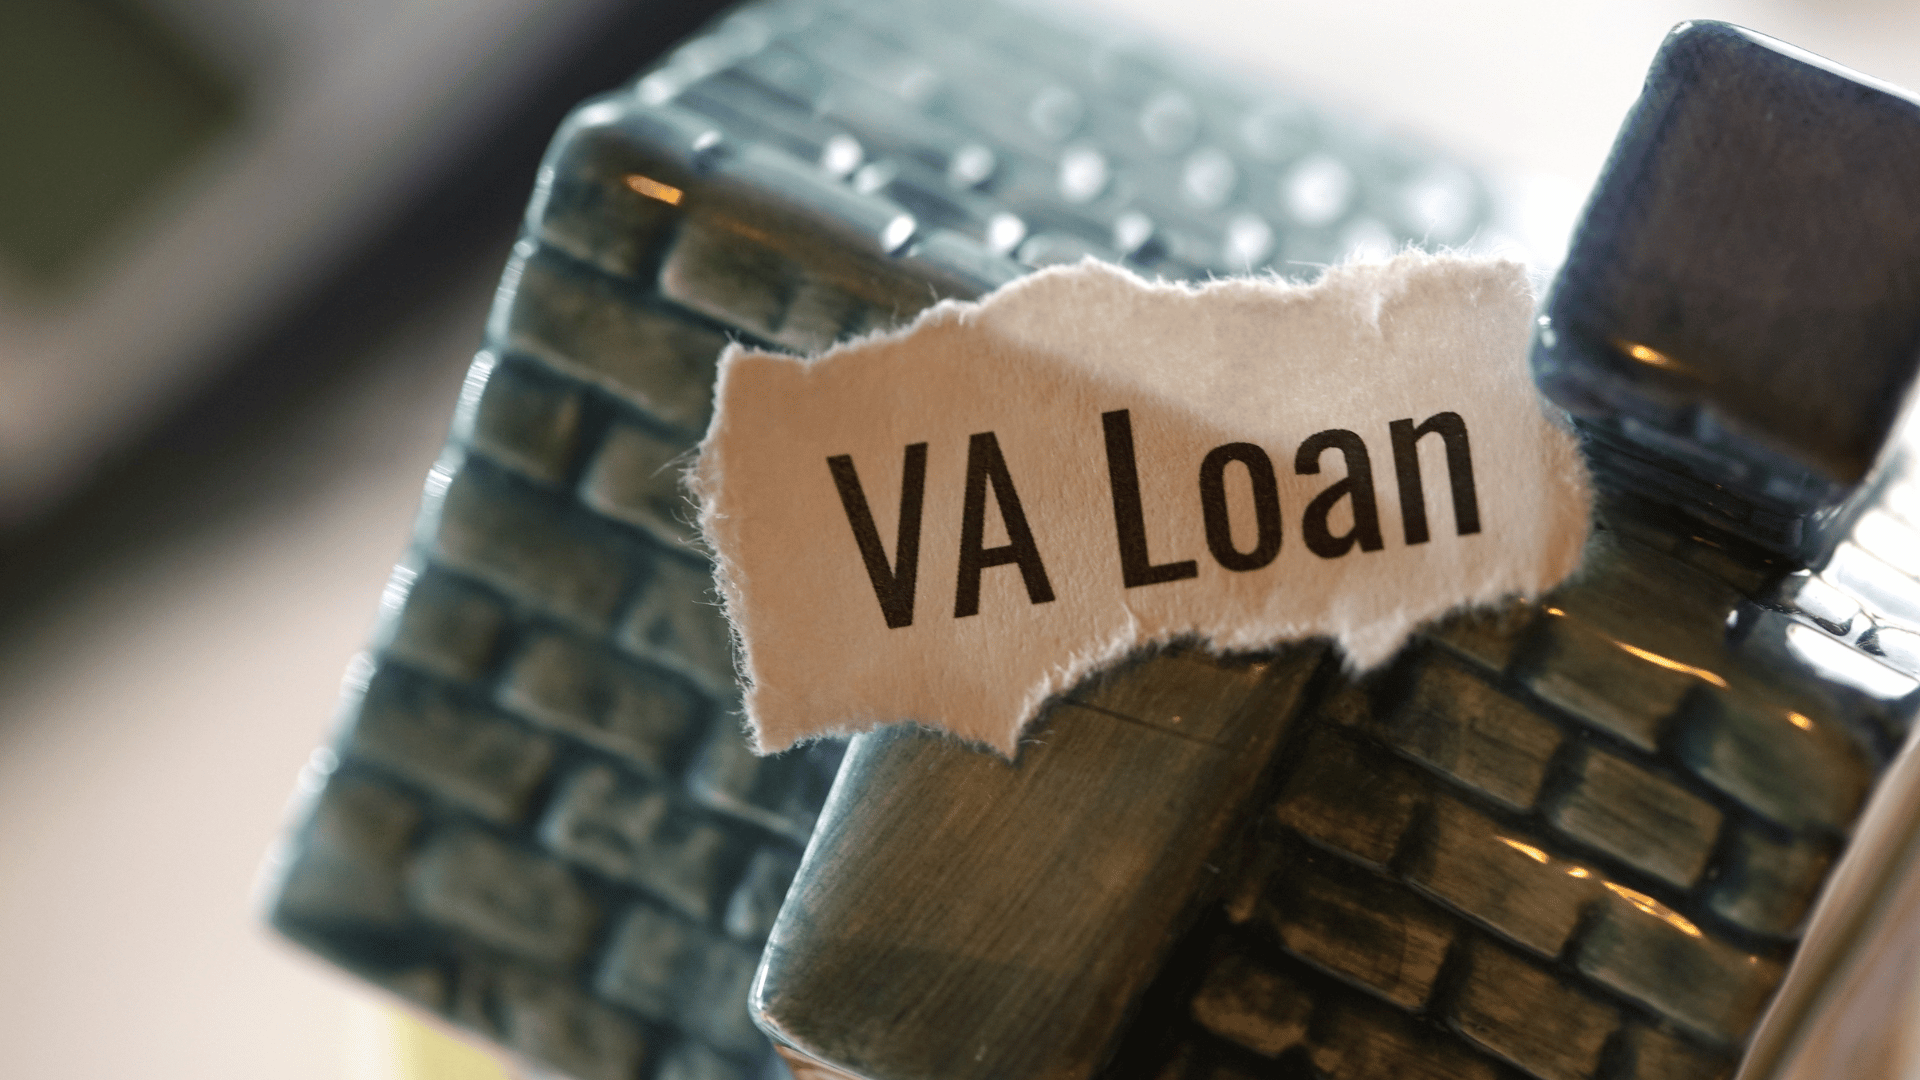 VA home loan FAQs